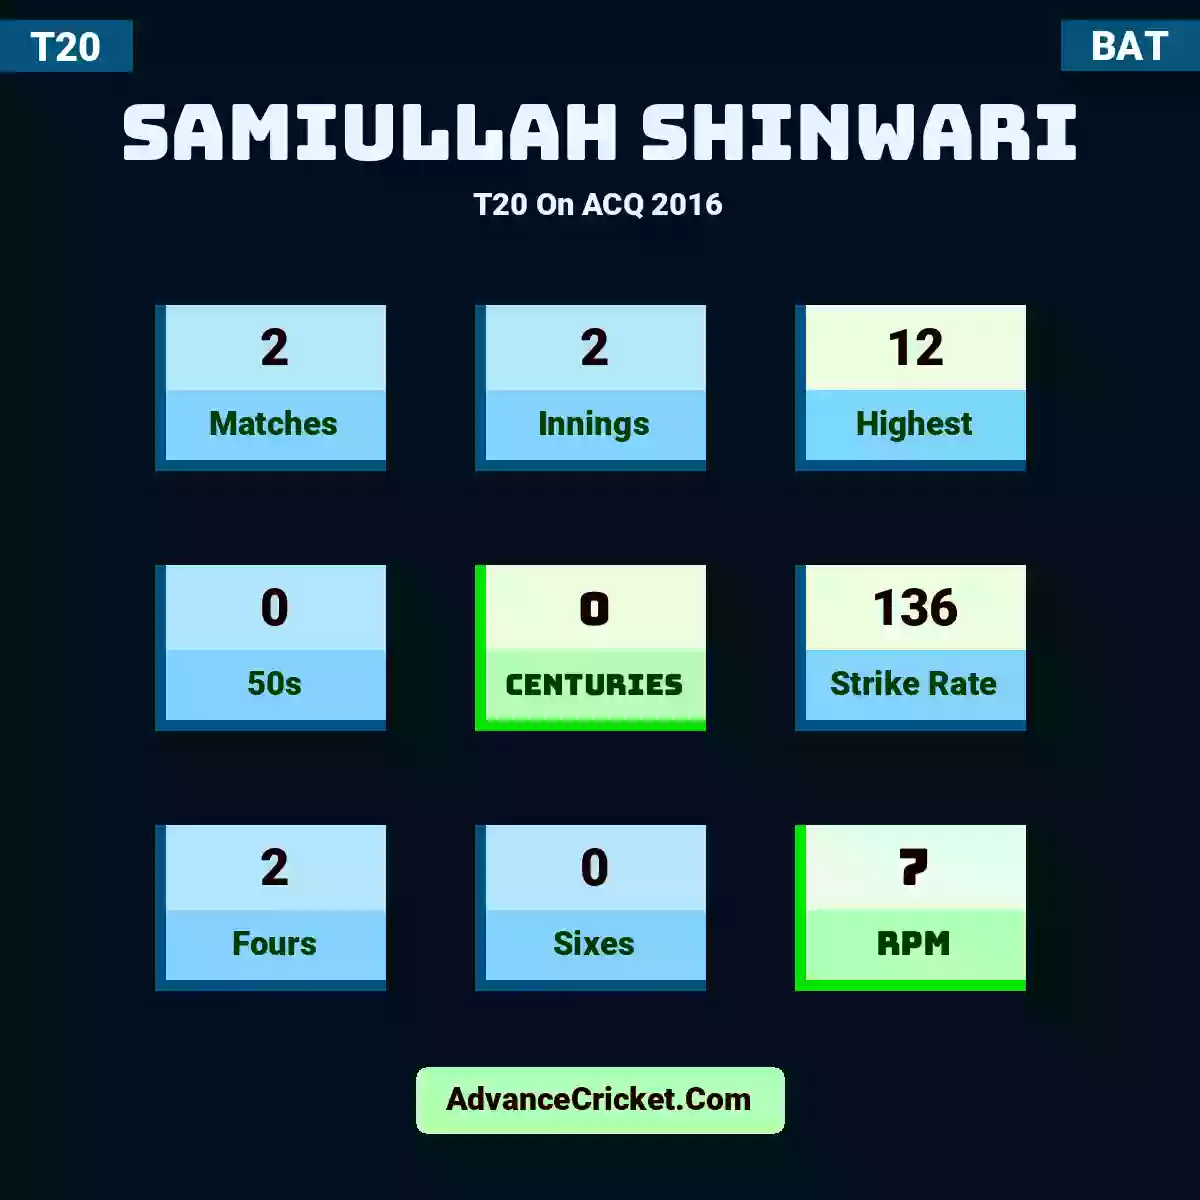 Samiullah Shinwari T20  On ACQ 2016, Samiullah Shinwari played 2 matches, scored 12 runs as highest, 0 half-centuries, and 0 centuries, with a strike rate of 136. S.Shinwari hit 2 fours and 0 sixes, with an RPM of 7.